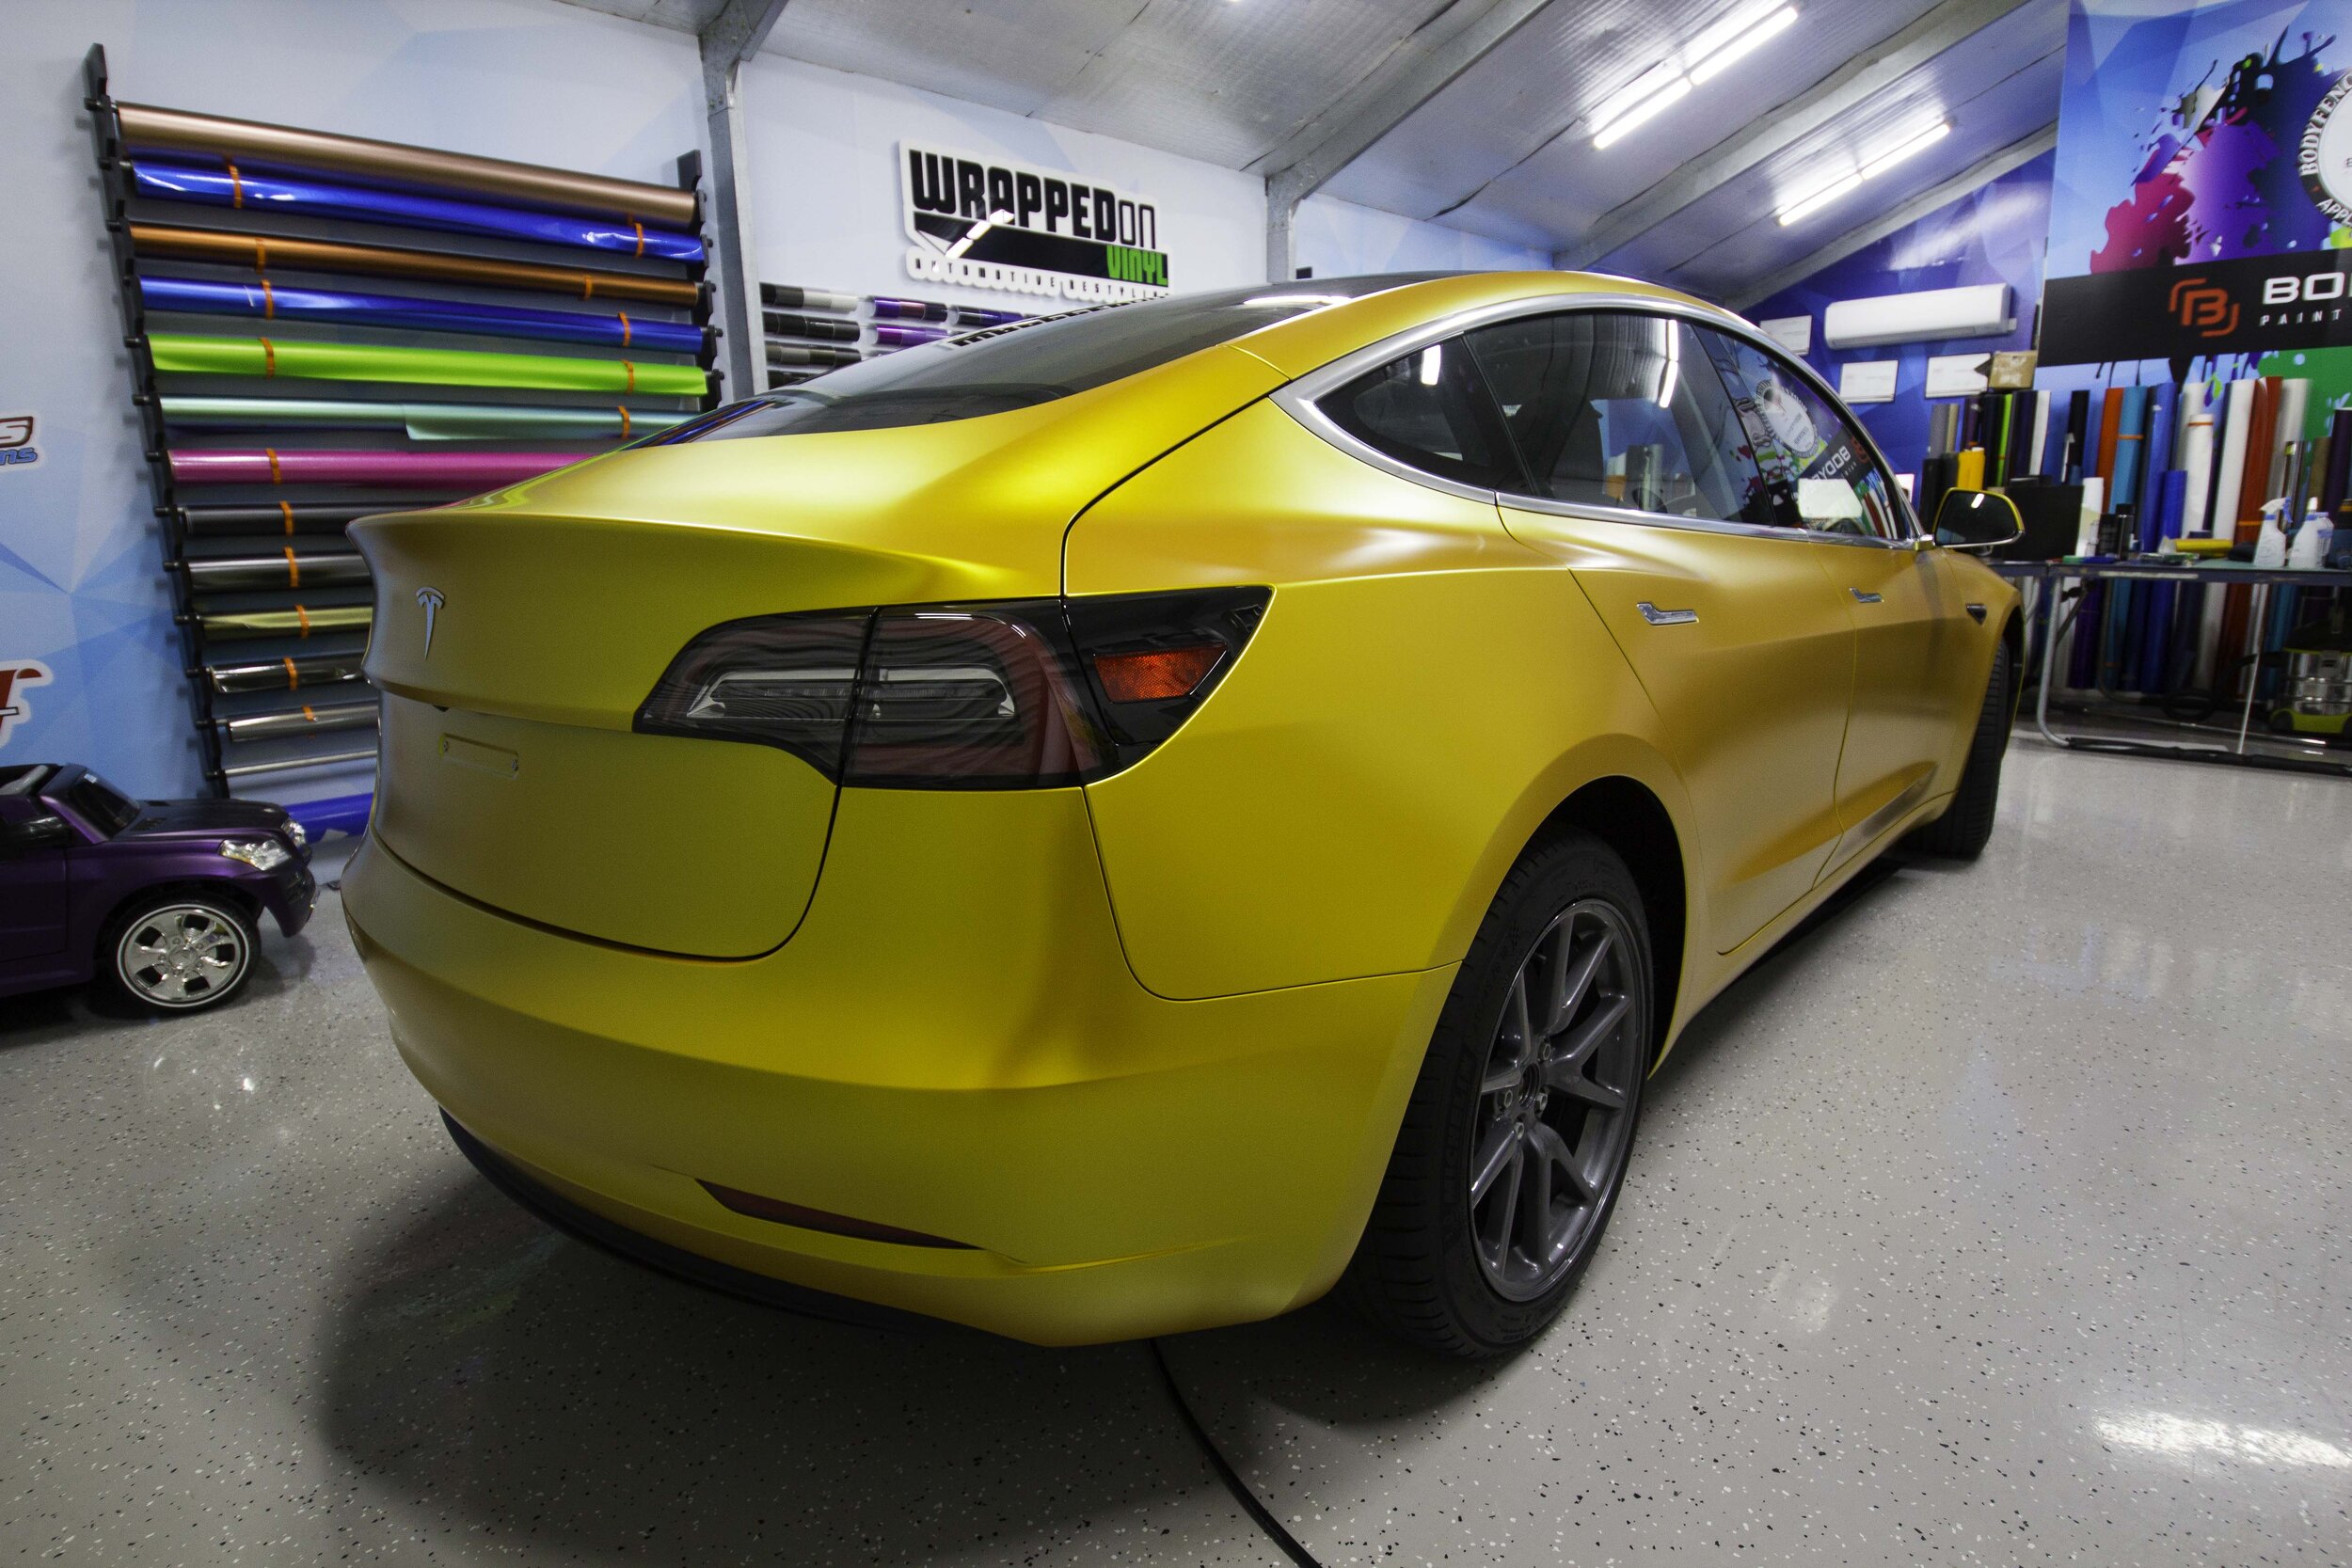 Tesla Model 3 - Avery Dennison Satin Energetic Yellow — Wrapped On Vinyl  Bendigo - Automotive Paint Protection Film & Colour Change Vinyl Wraps